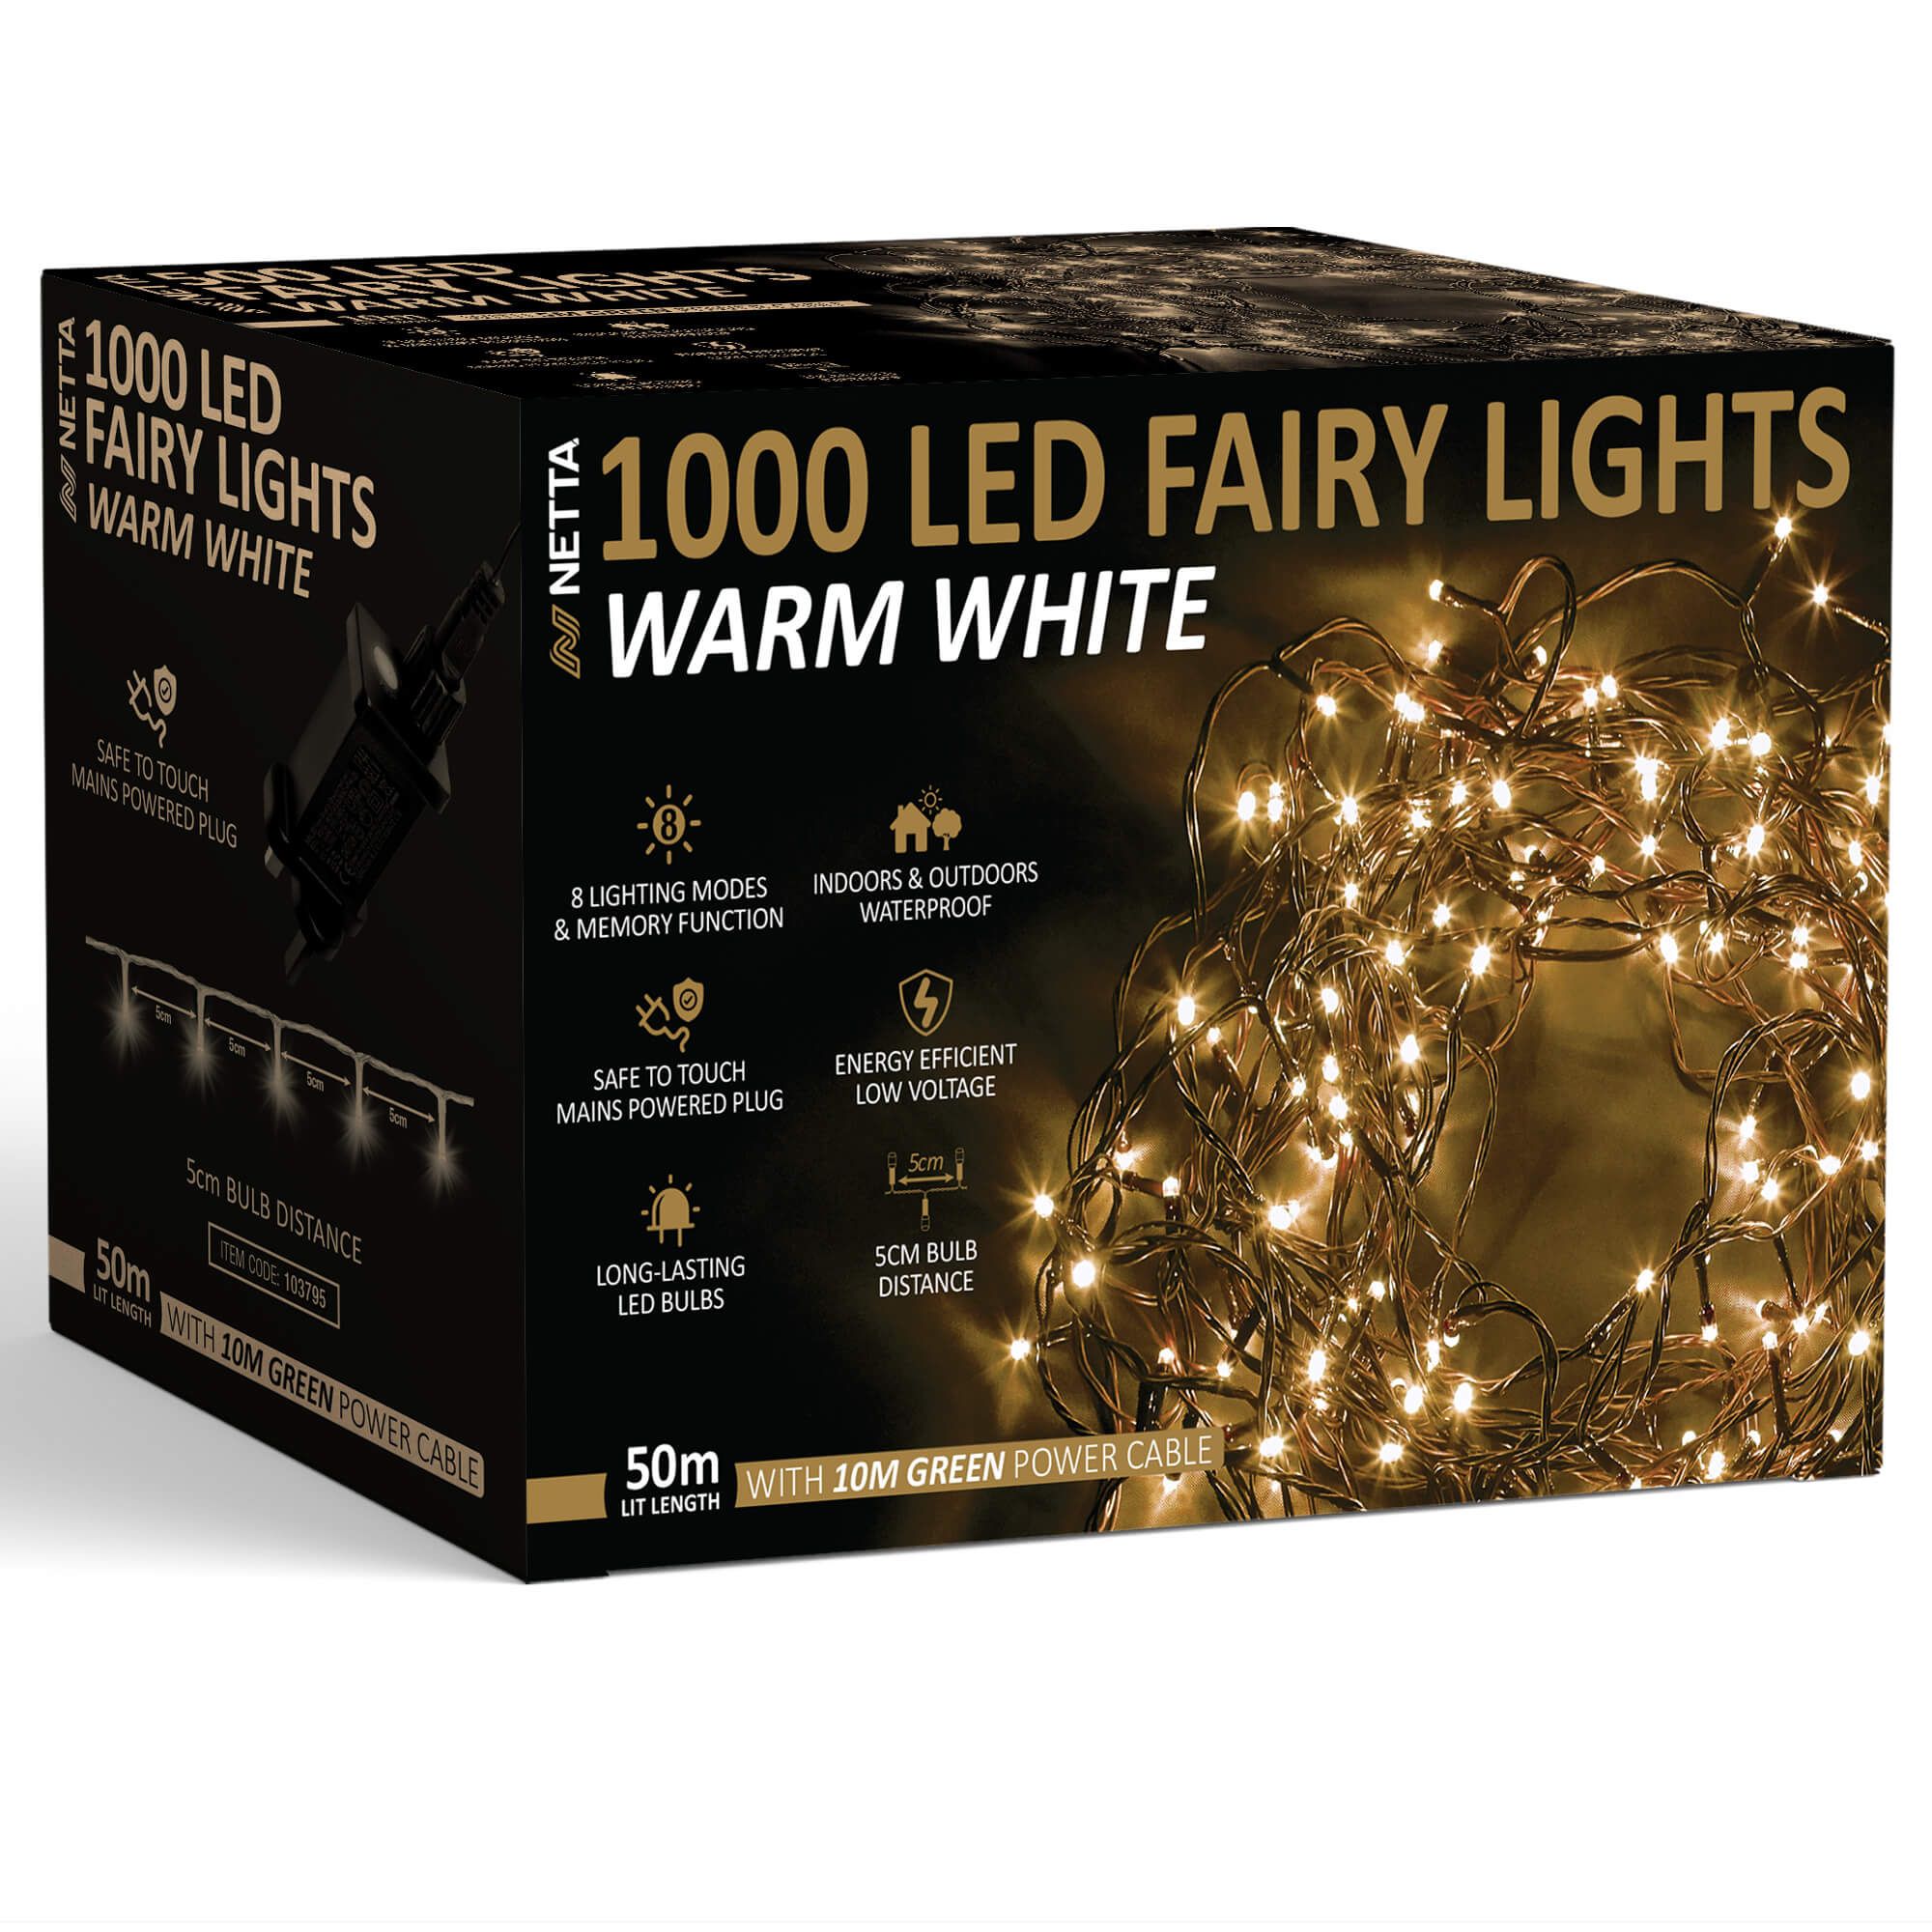 NETTA 1000 LED Fairy Lights 50M Christmas Tree Lights Green Cable - Warm White